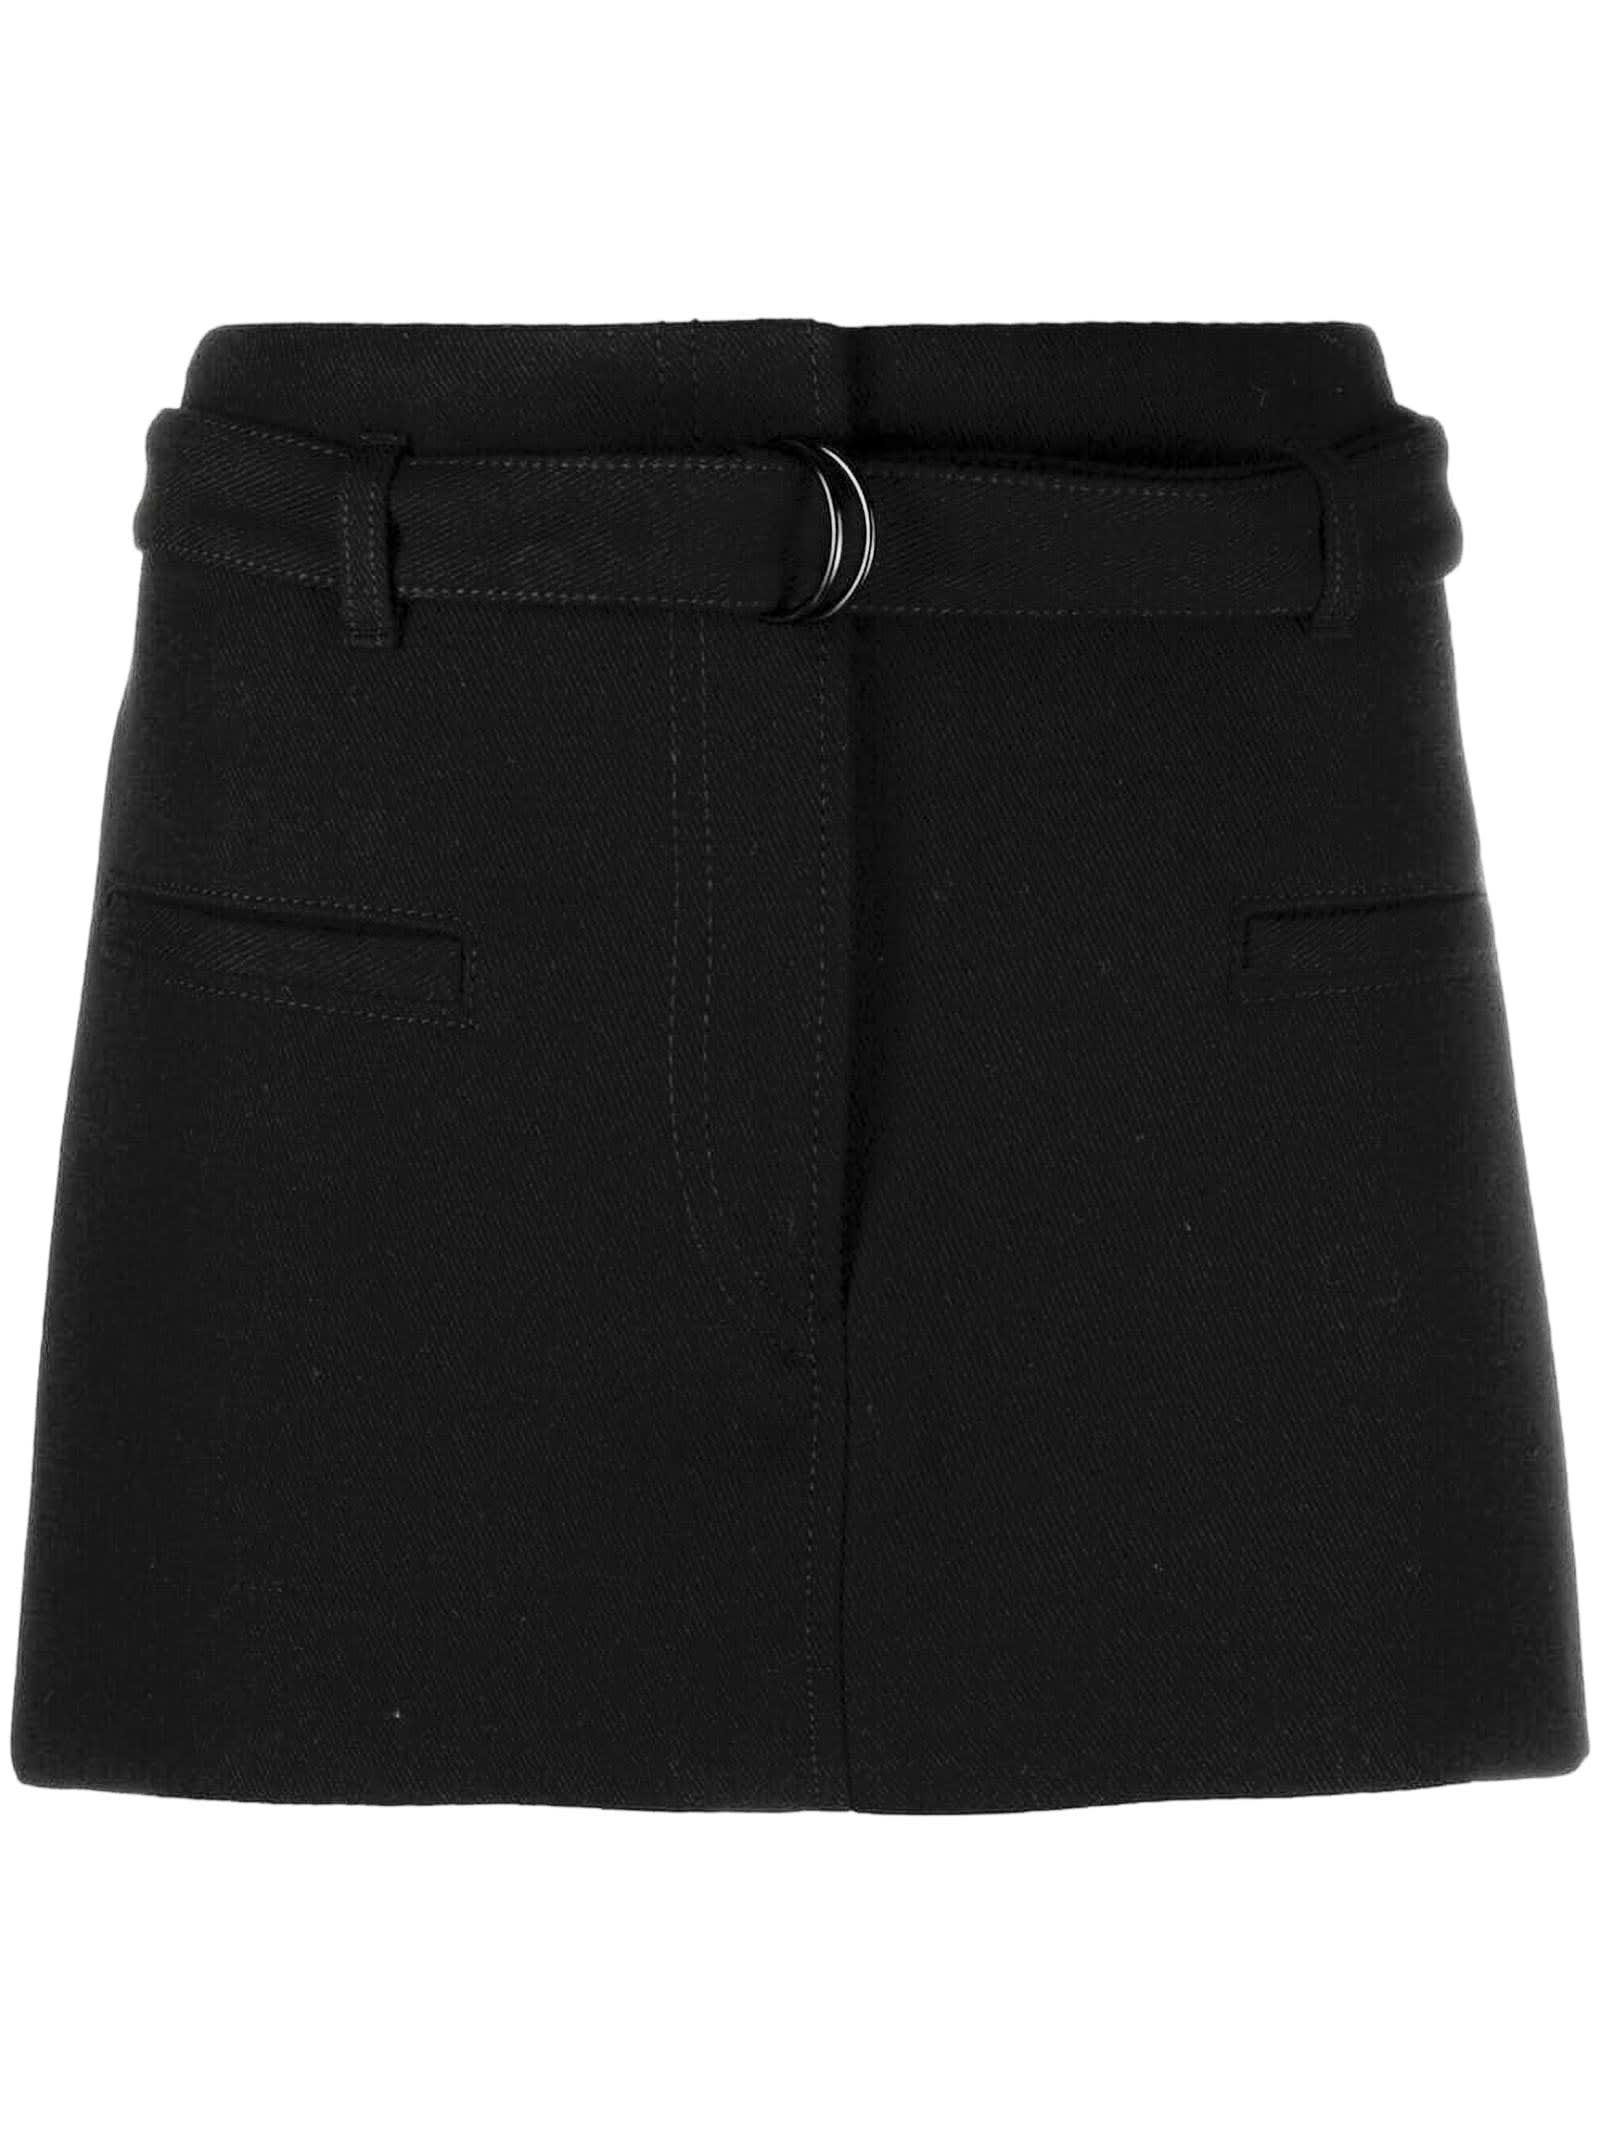 Philosophy di Lorenzo Serafini Black Cotton-virgin Wool Blend Miniskirt